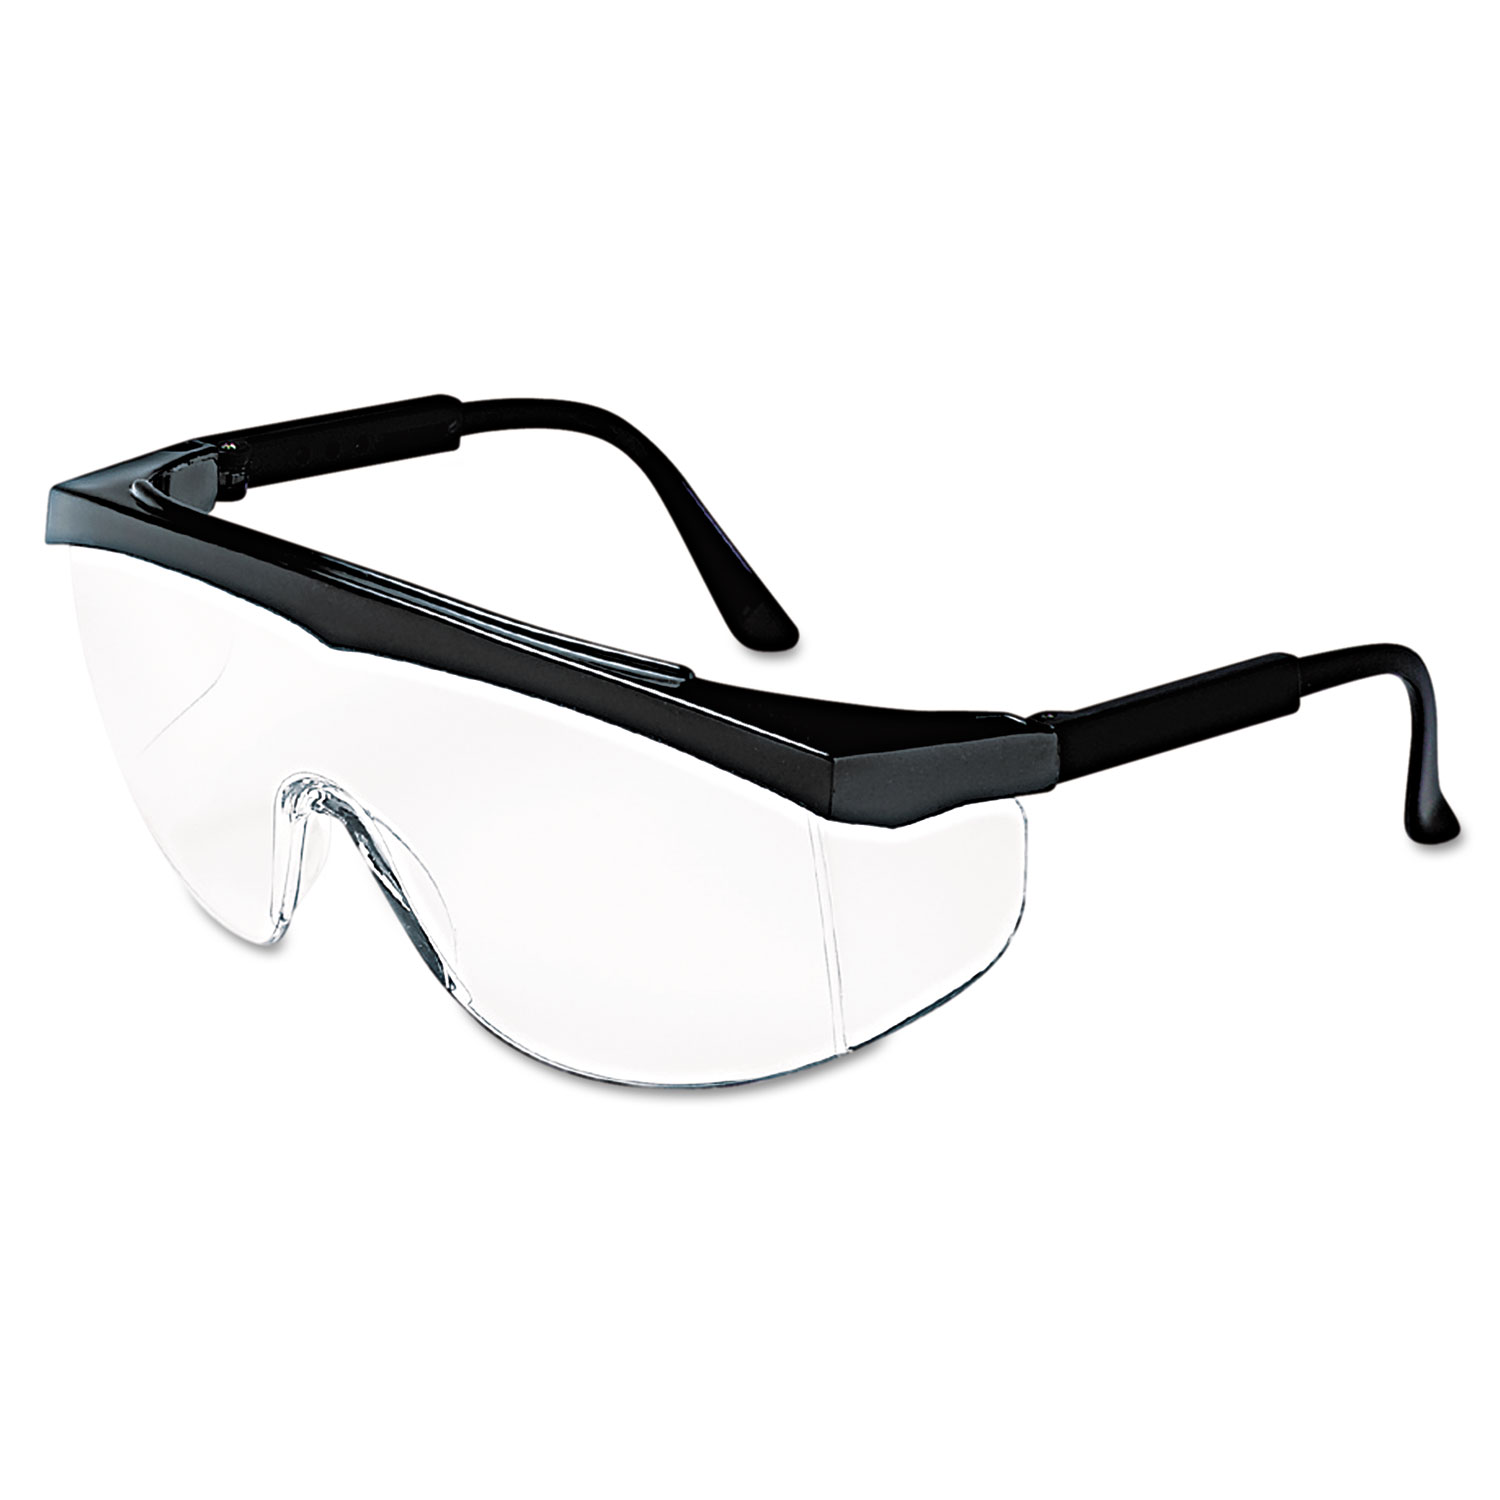 Stratos Safety Glasses, Black Frame, Clear Lens, 12/box - image 1 of 1